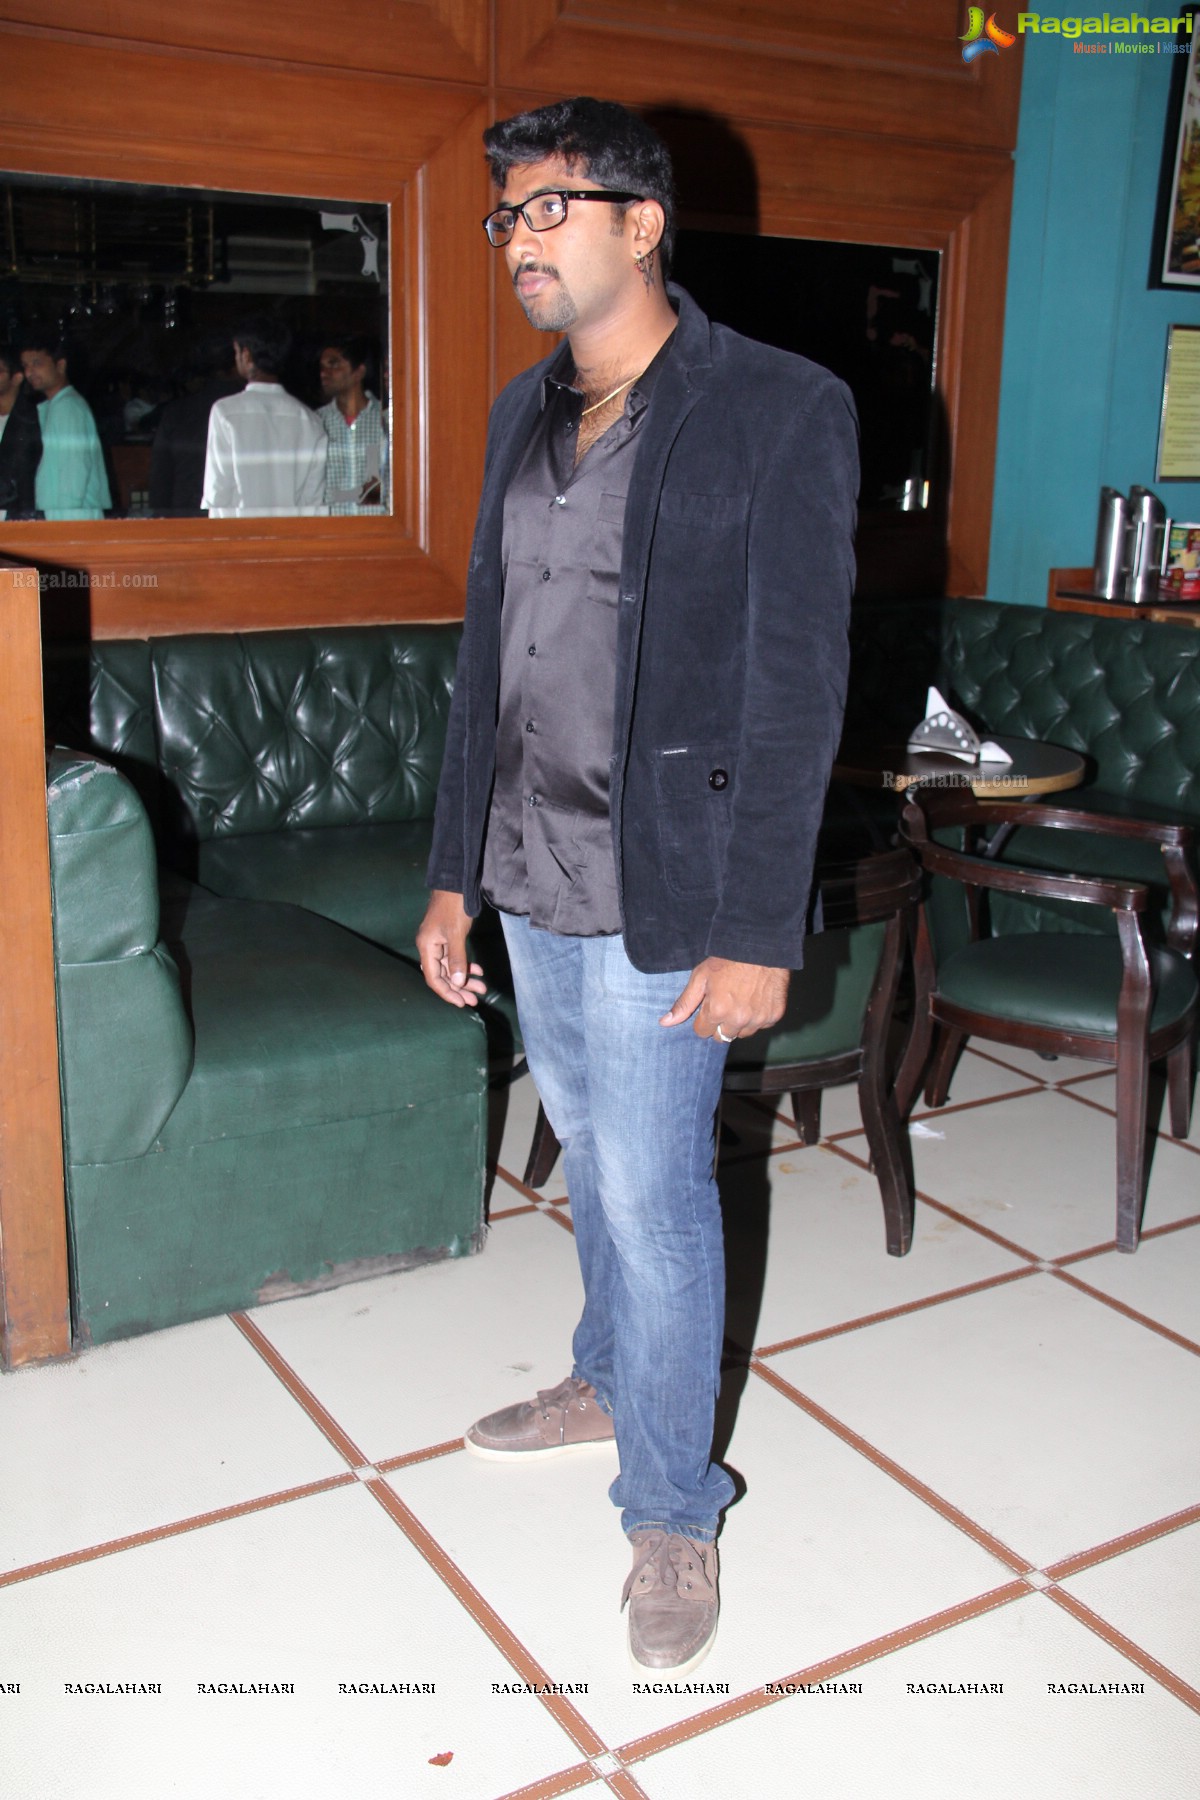 MGIT 2014 Farewell Party at Cuba Libre, Hyderabad